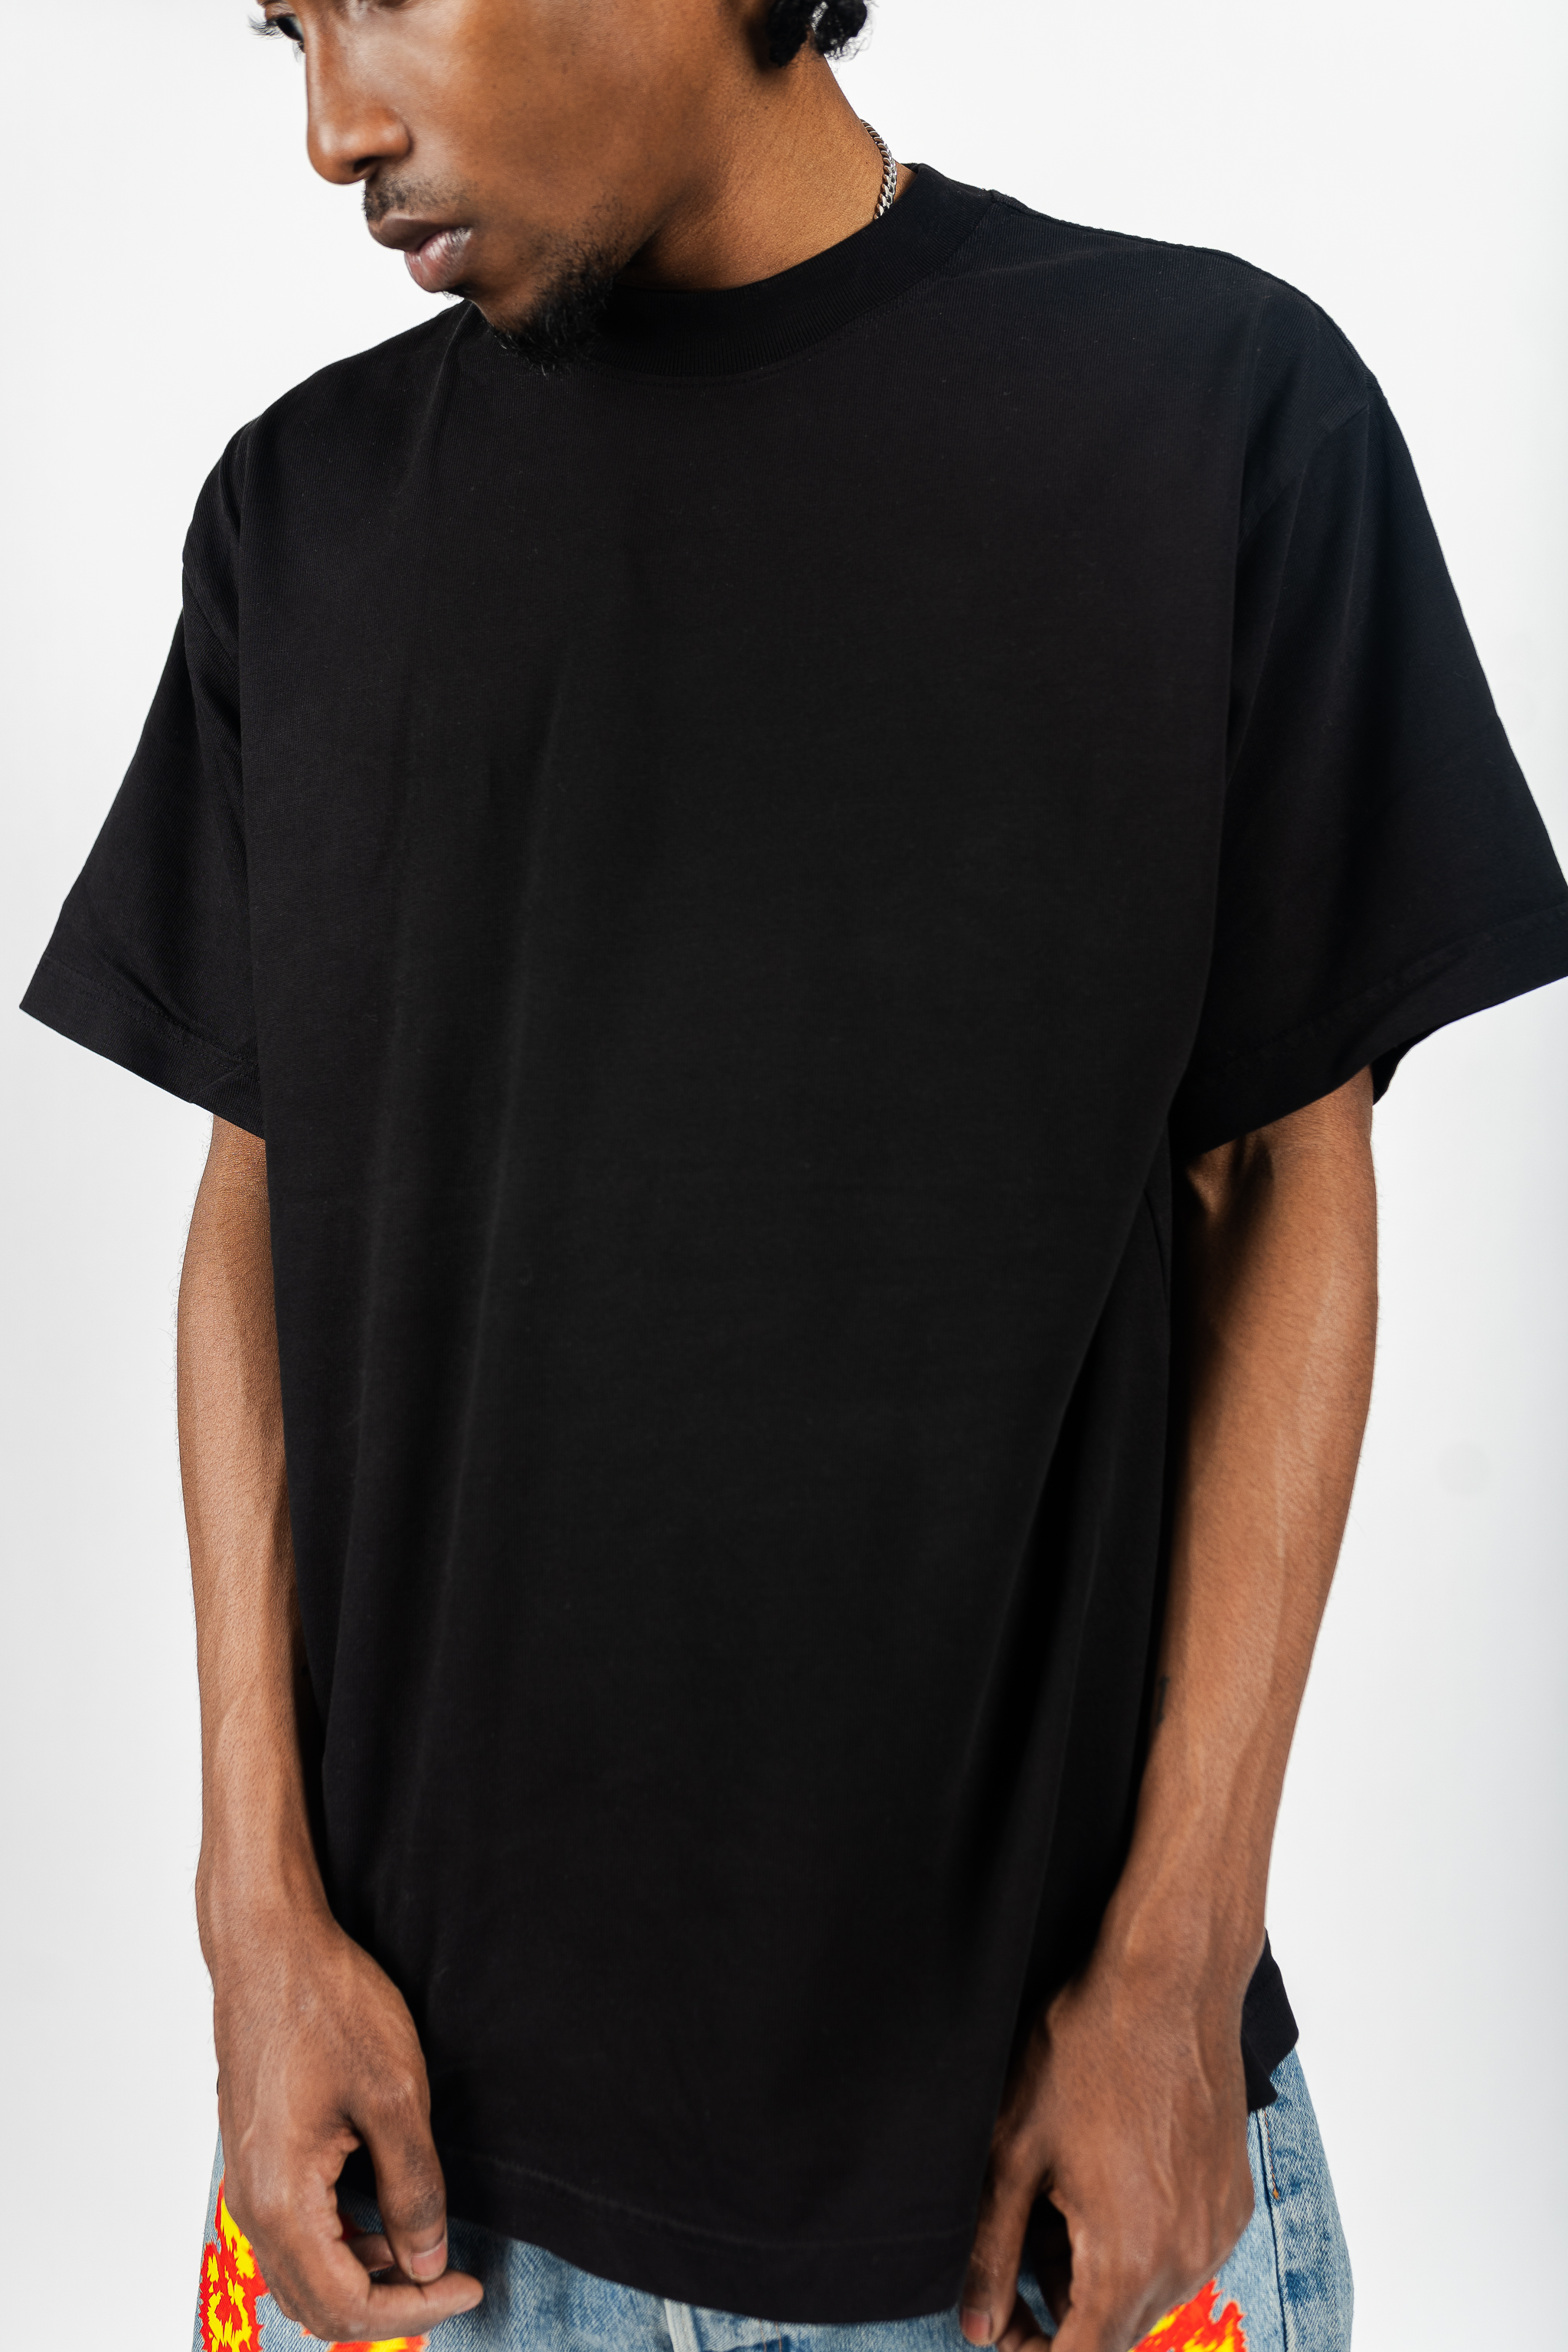 Shaka Wear Garment-Dyed Crewneck T-Shirt